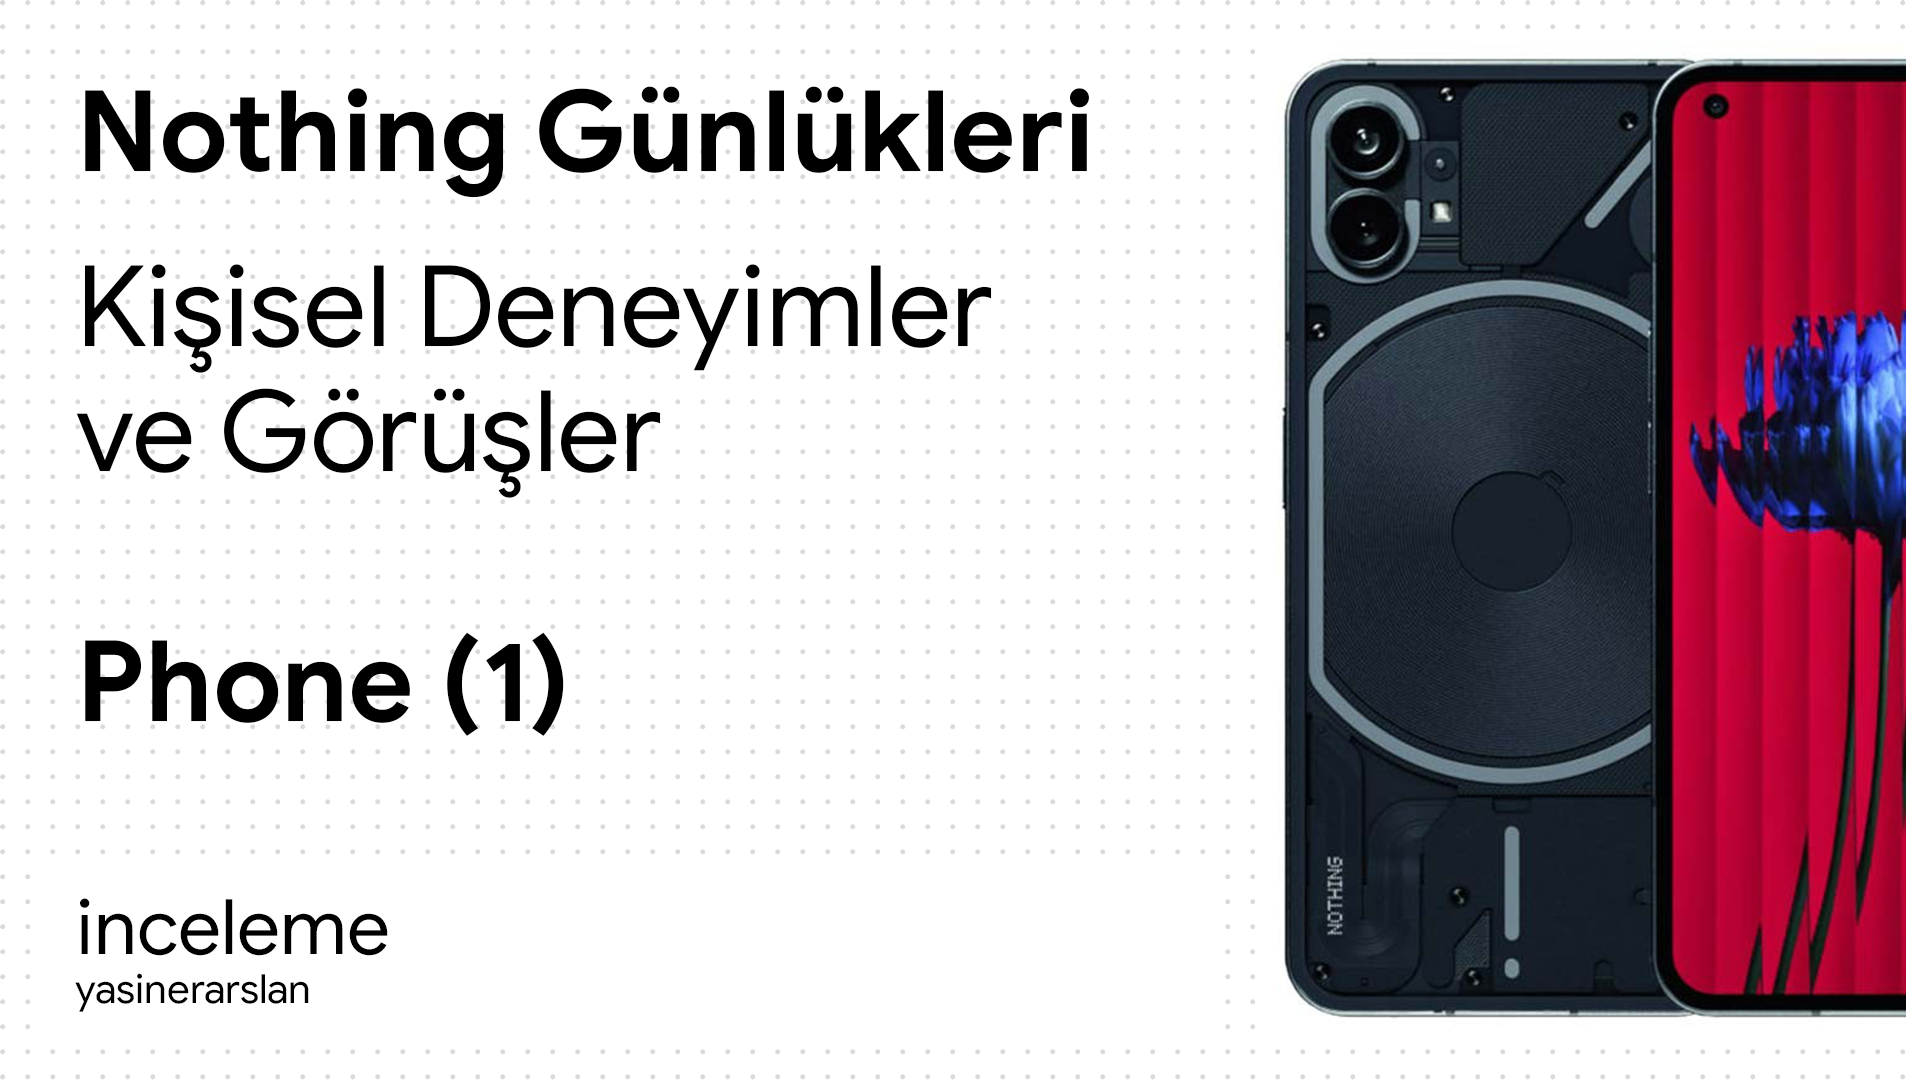 nothing_gunlukleri_phone1_kisisel_deneyimler_ve_gorusler_cover